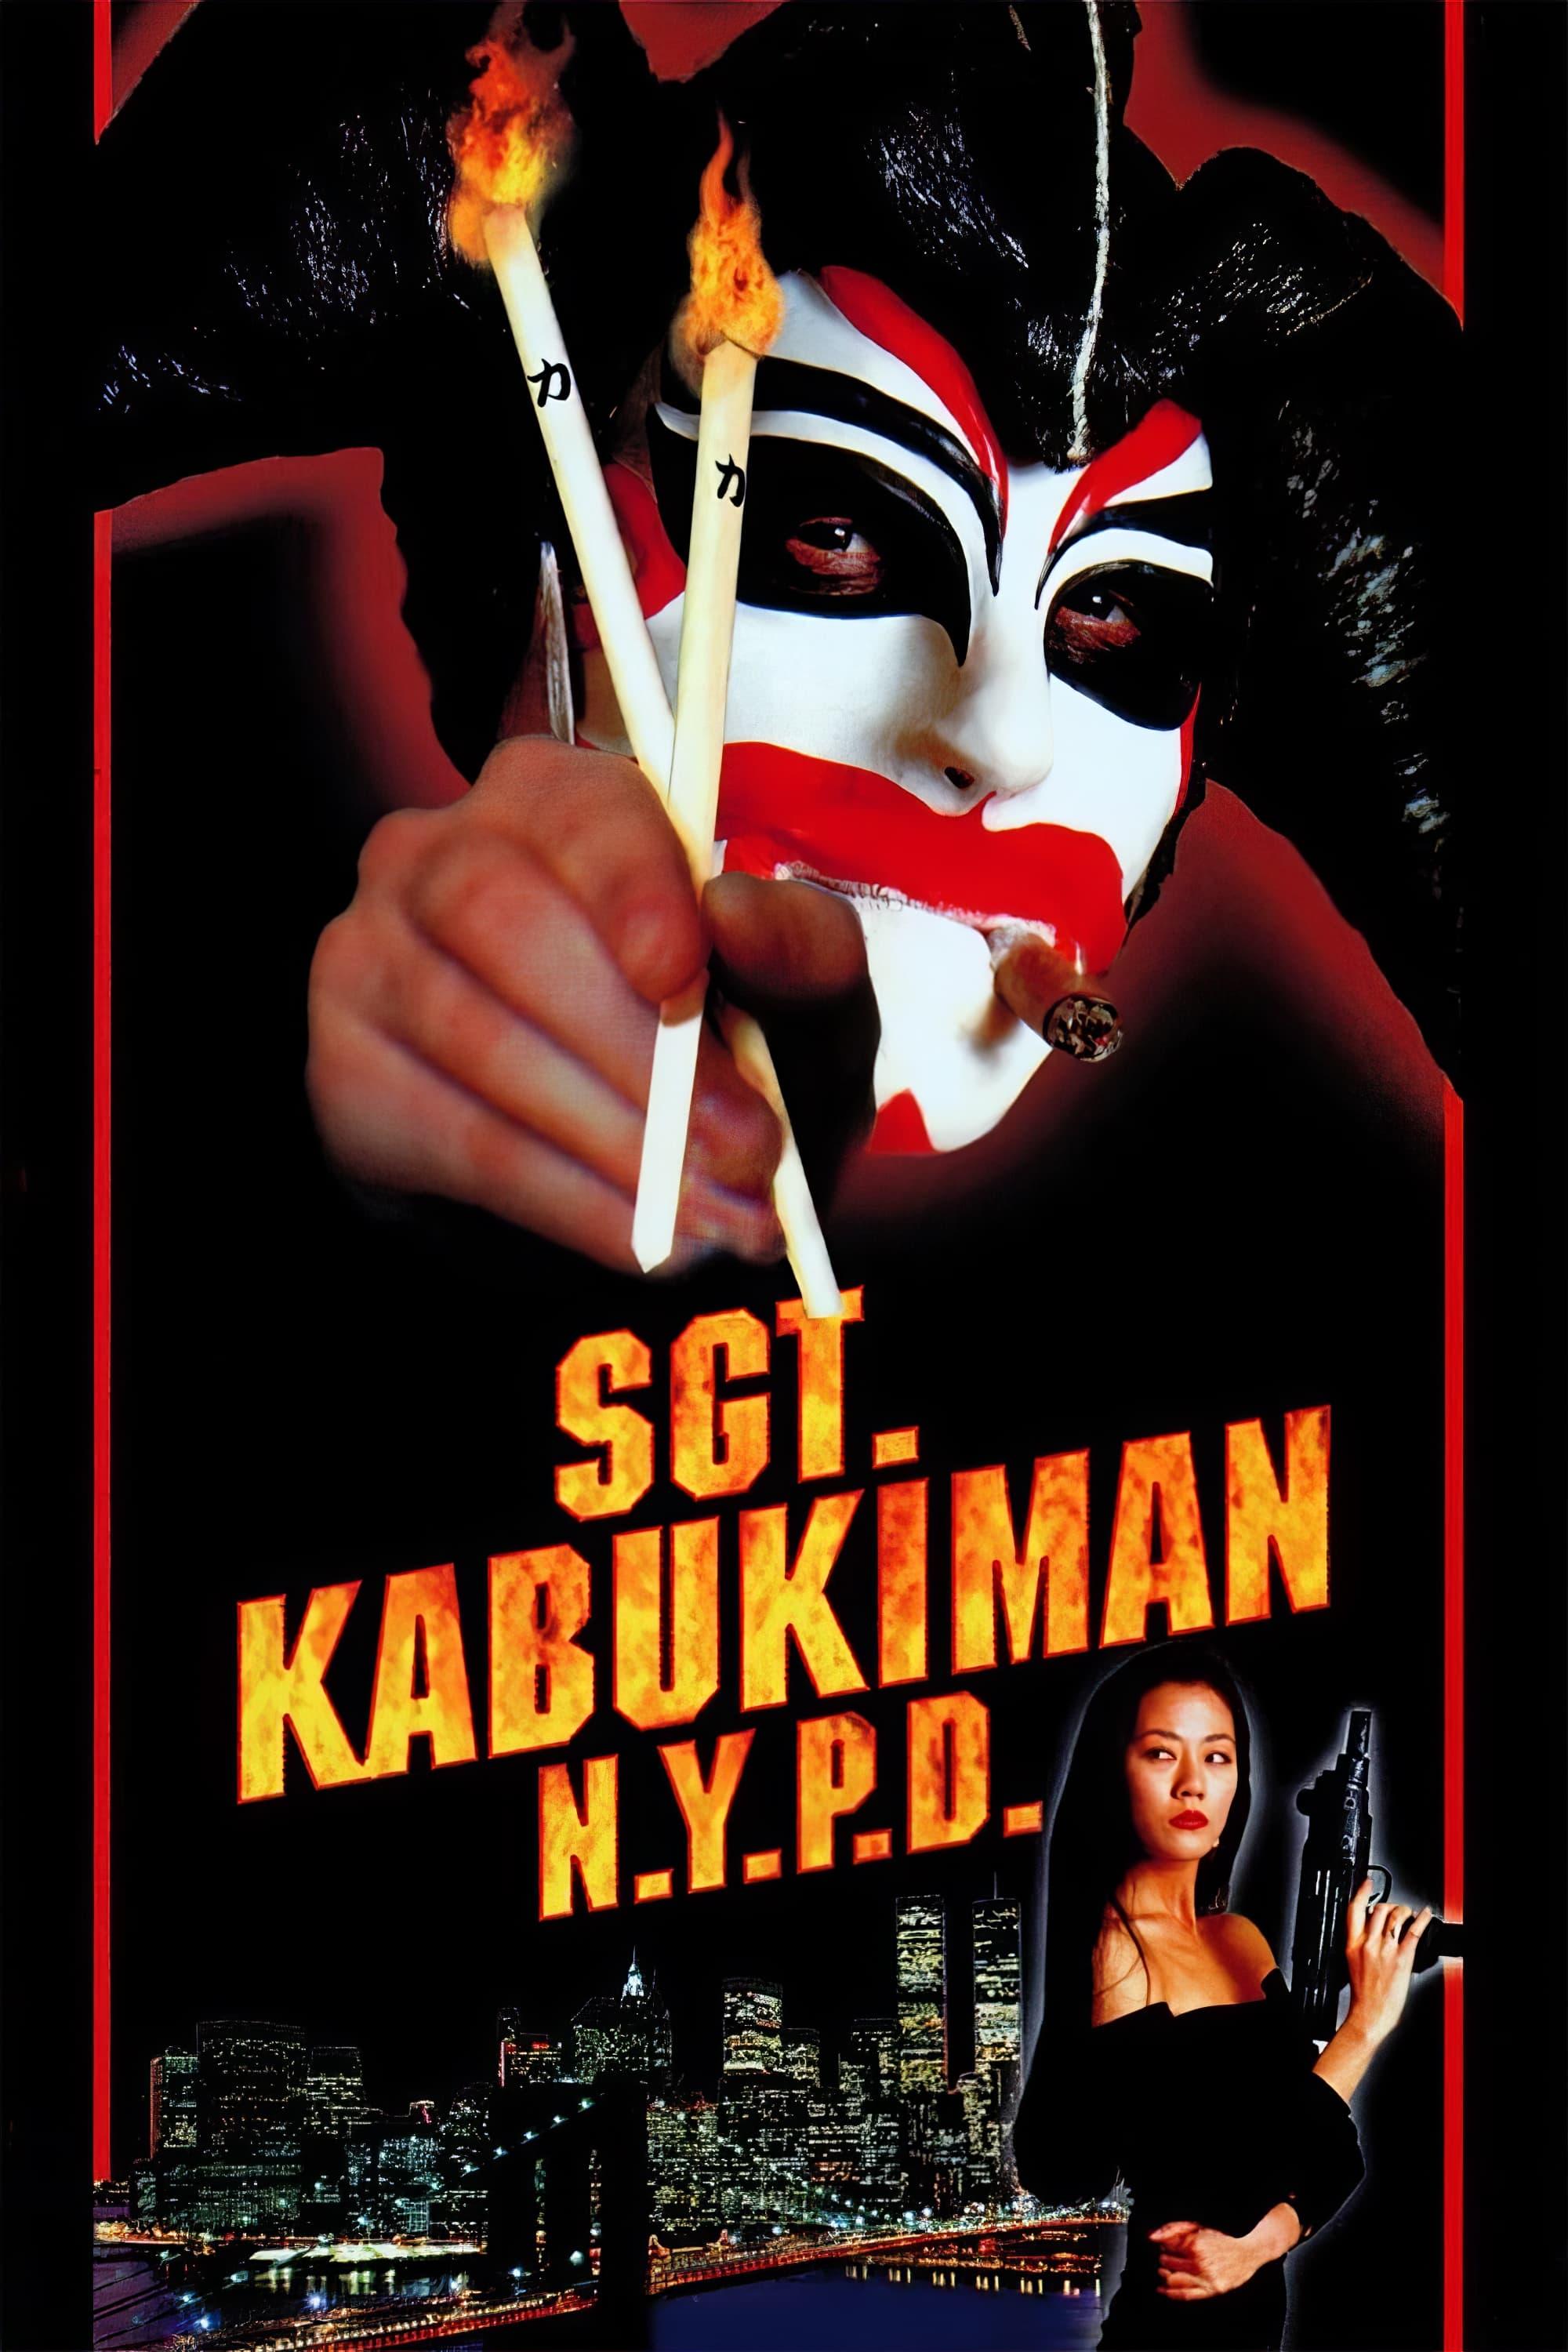 Sgt. Kabukiman N.Y.P.D. poster